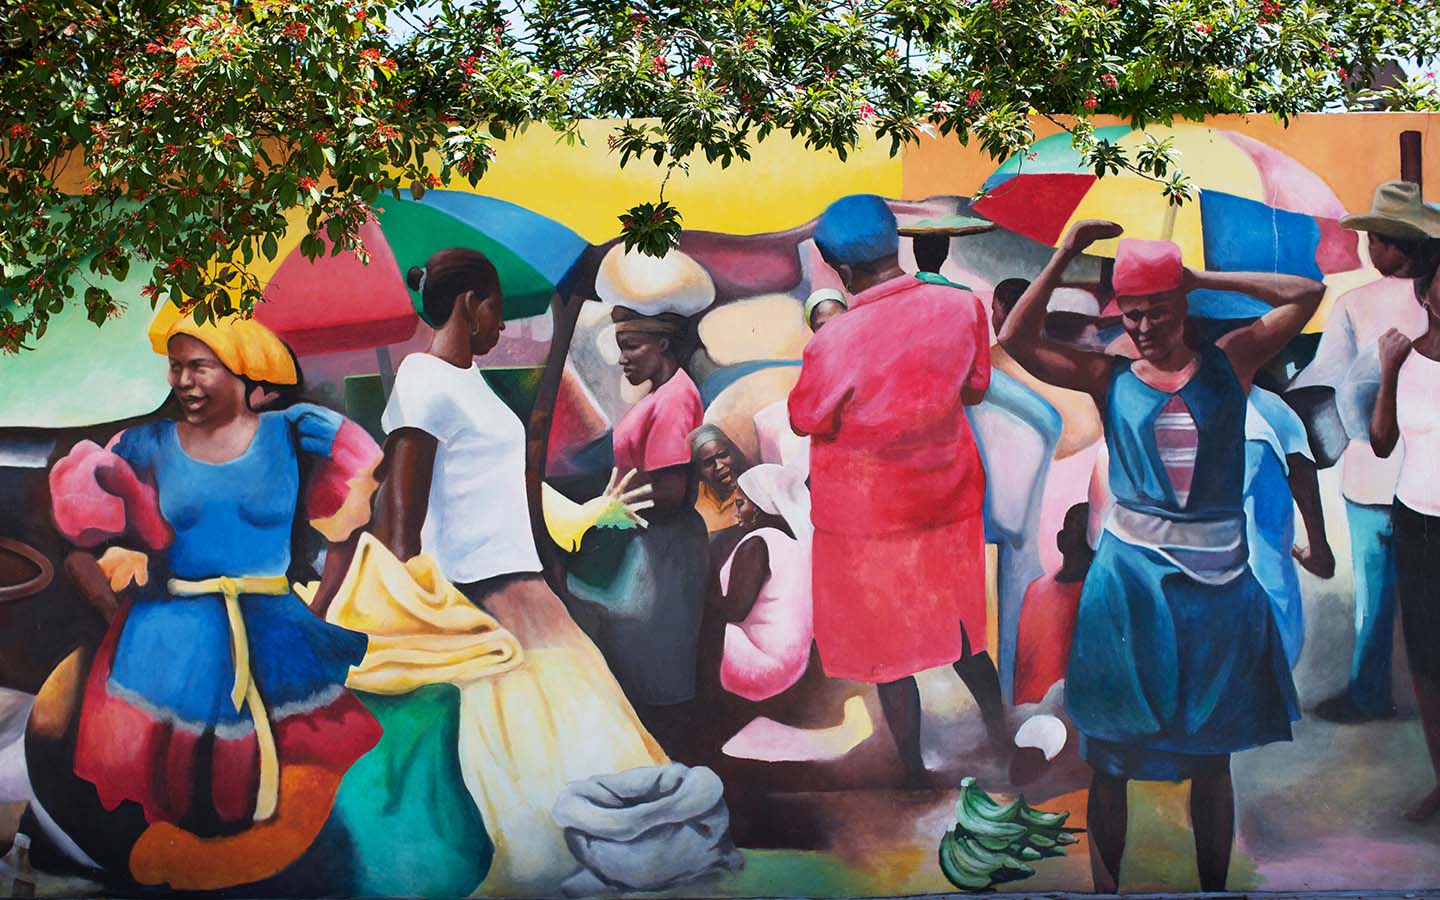 Farbenfrohe Wandmalerei eines Straßenmarktes in Little Haiti